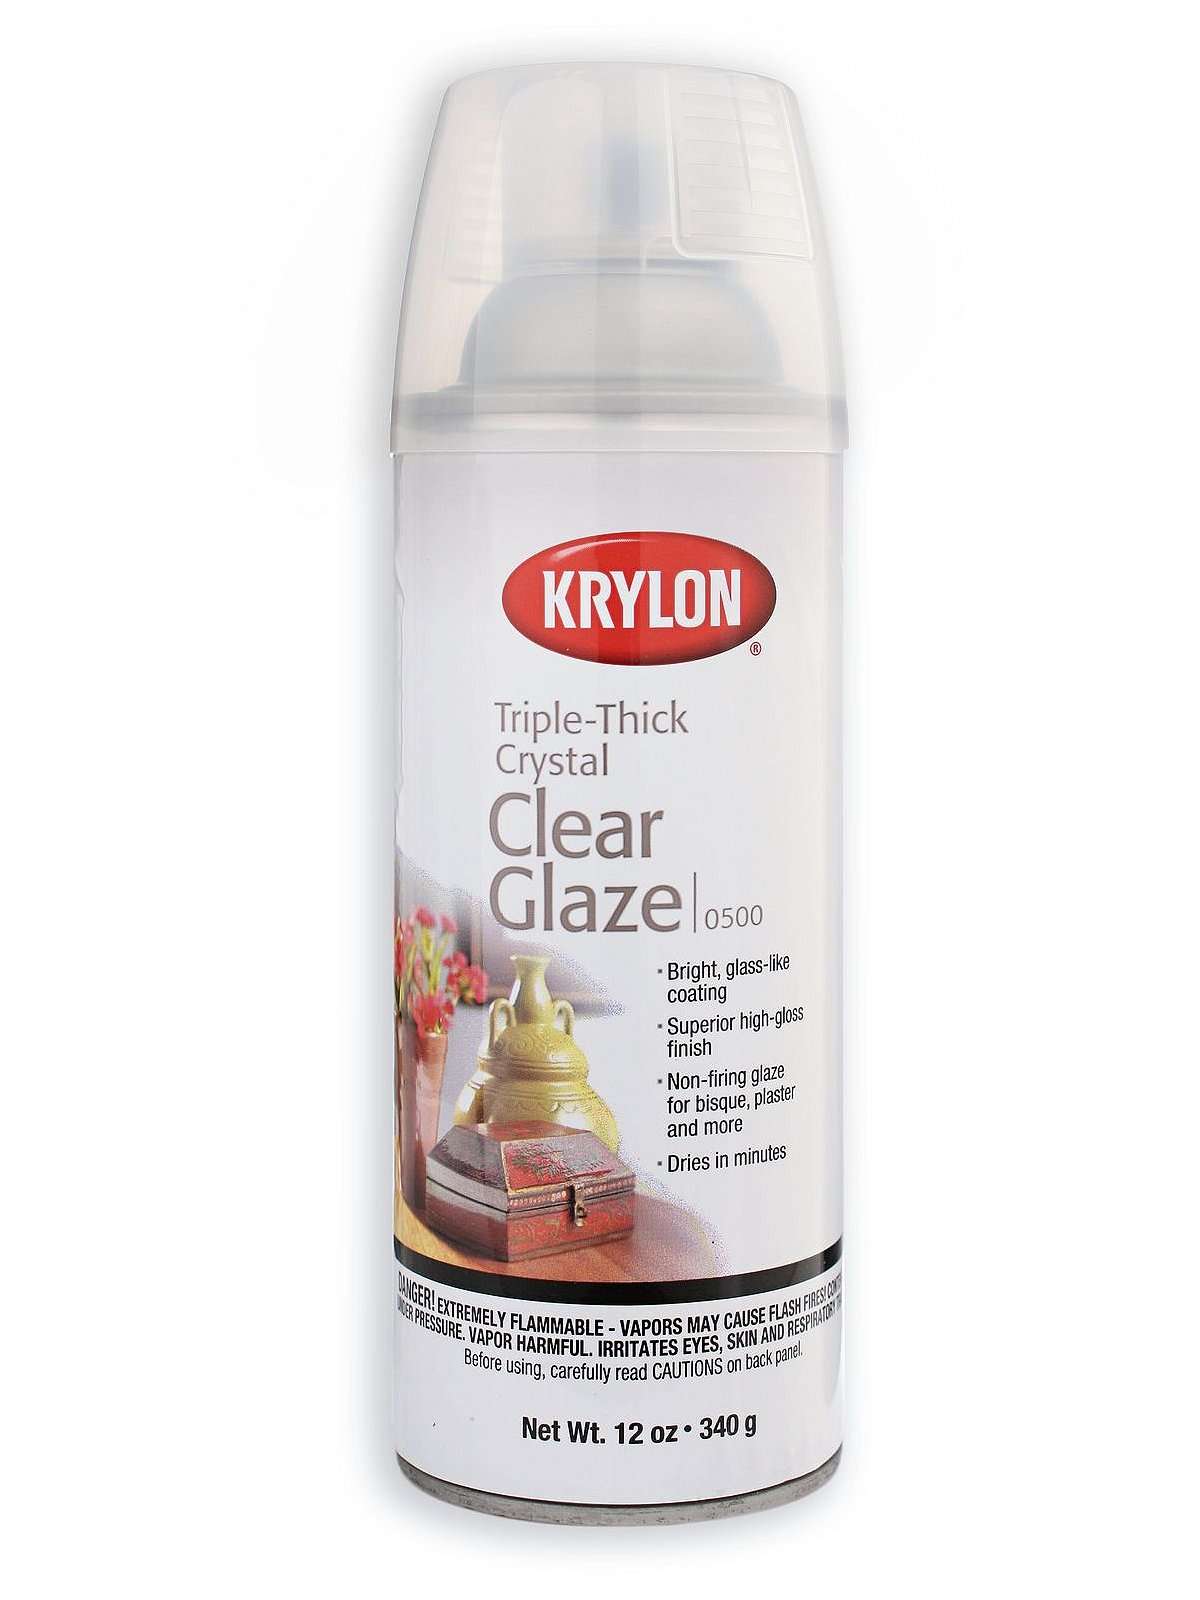 Krylon Crystal Clear Acrylic Coating